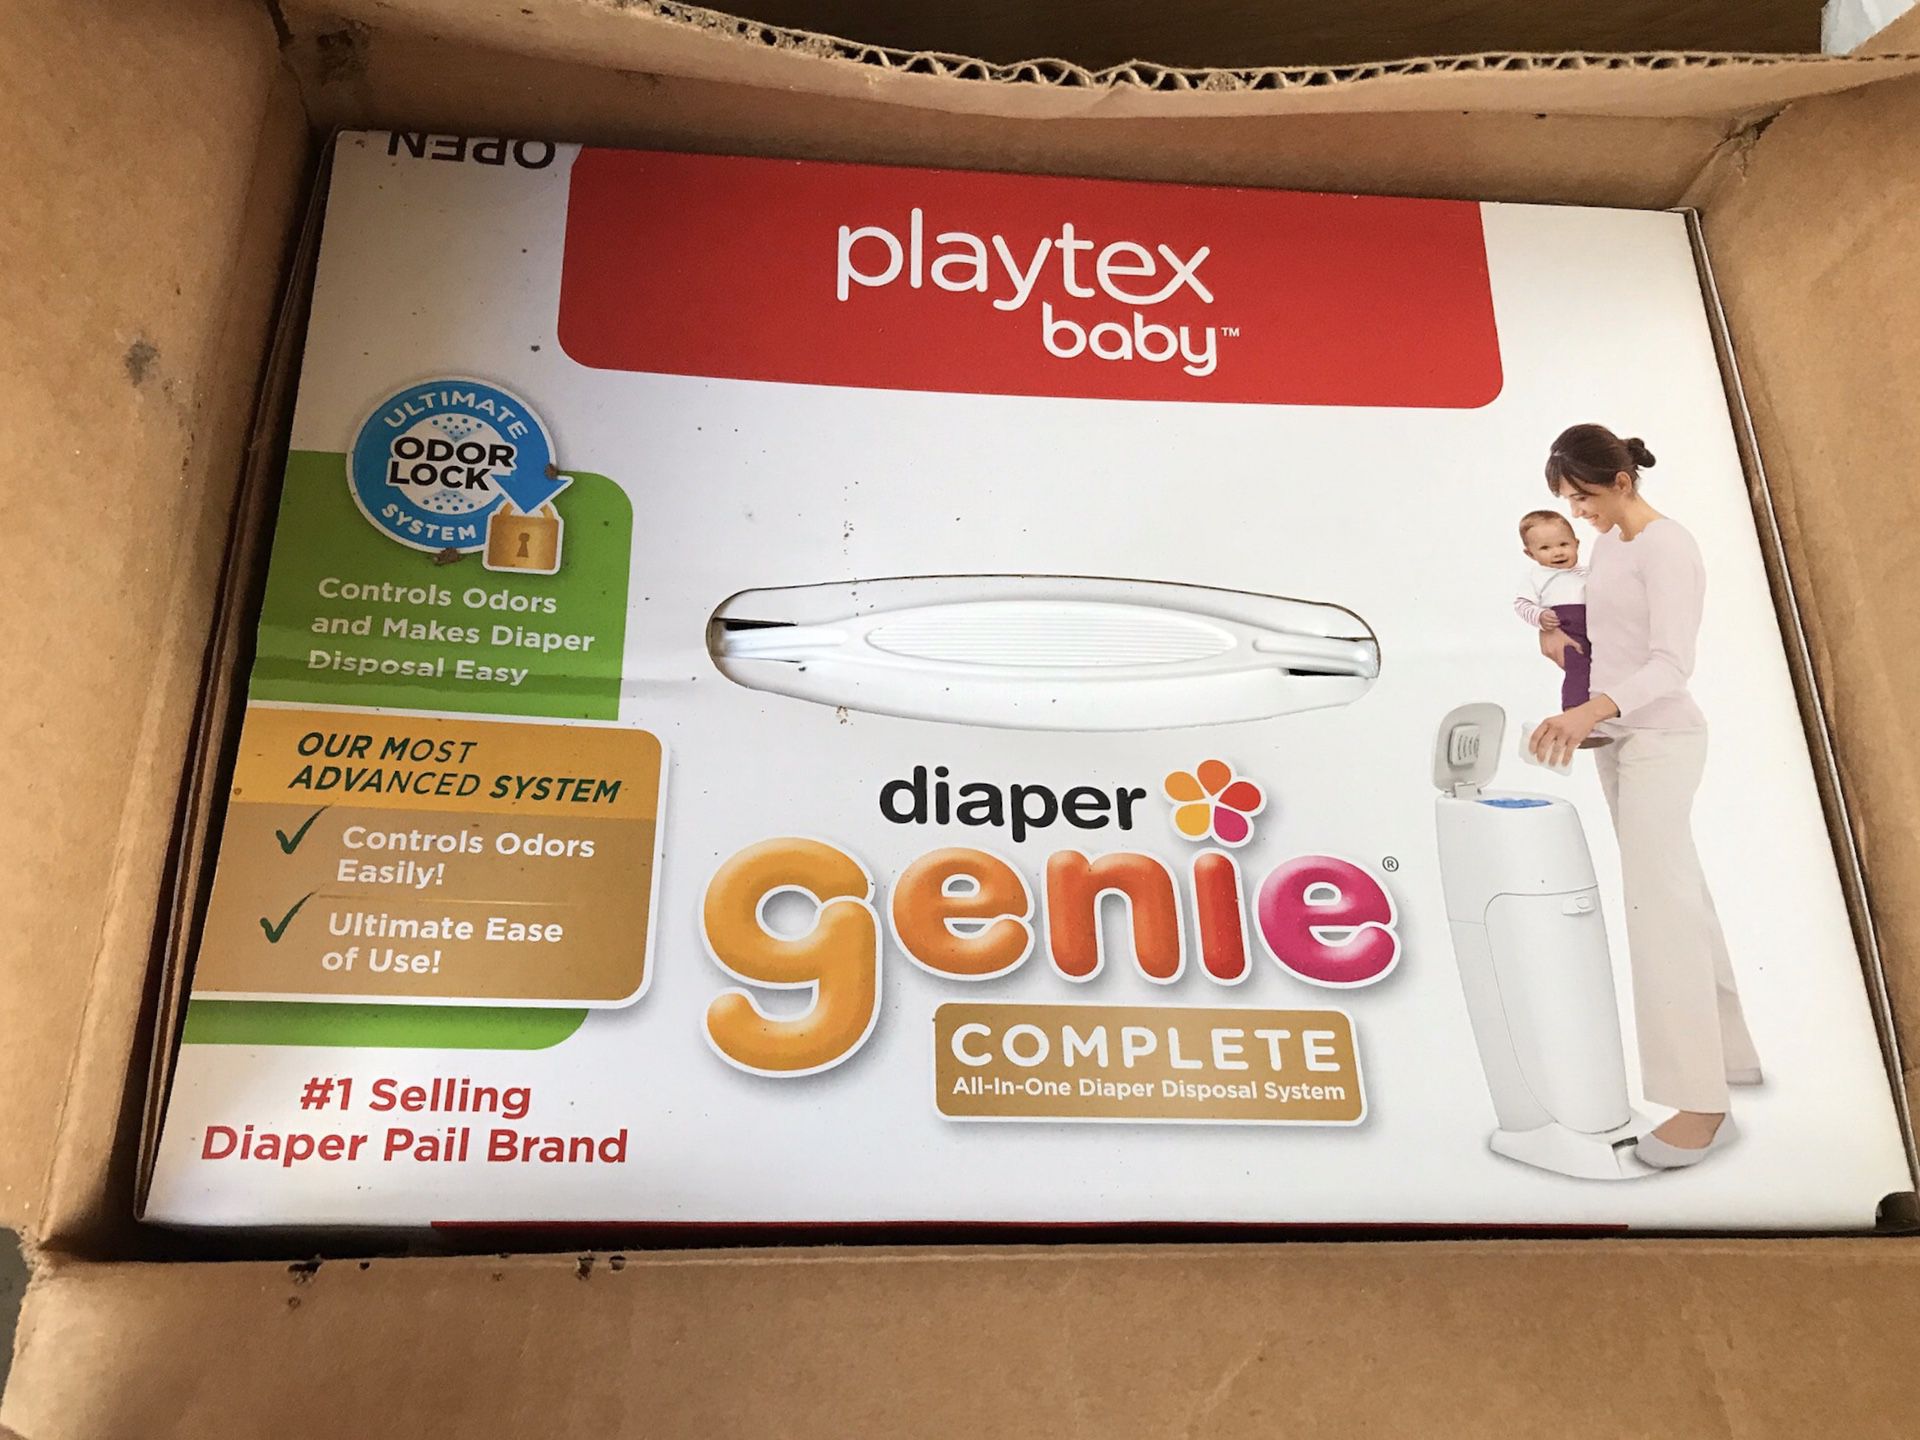 Playtex diaper genie and refills